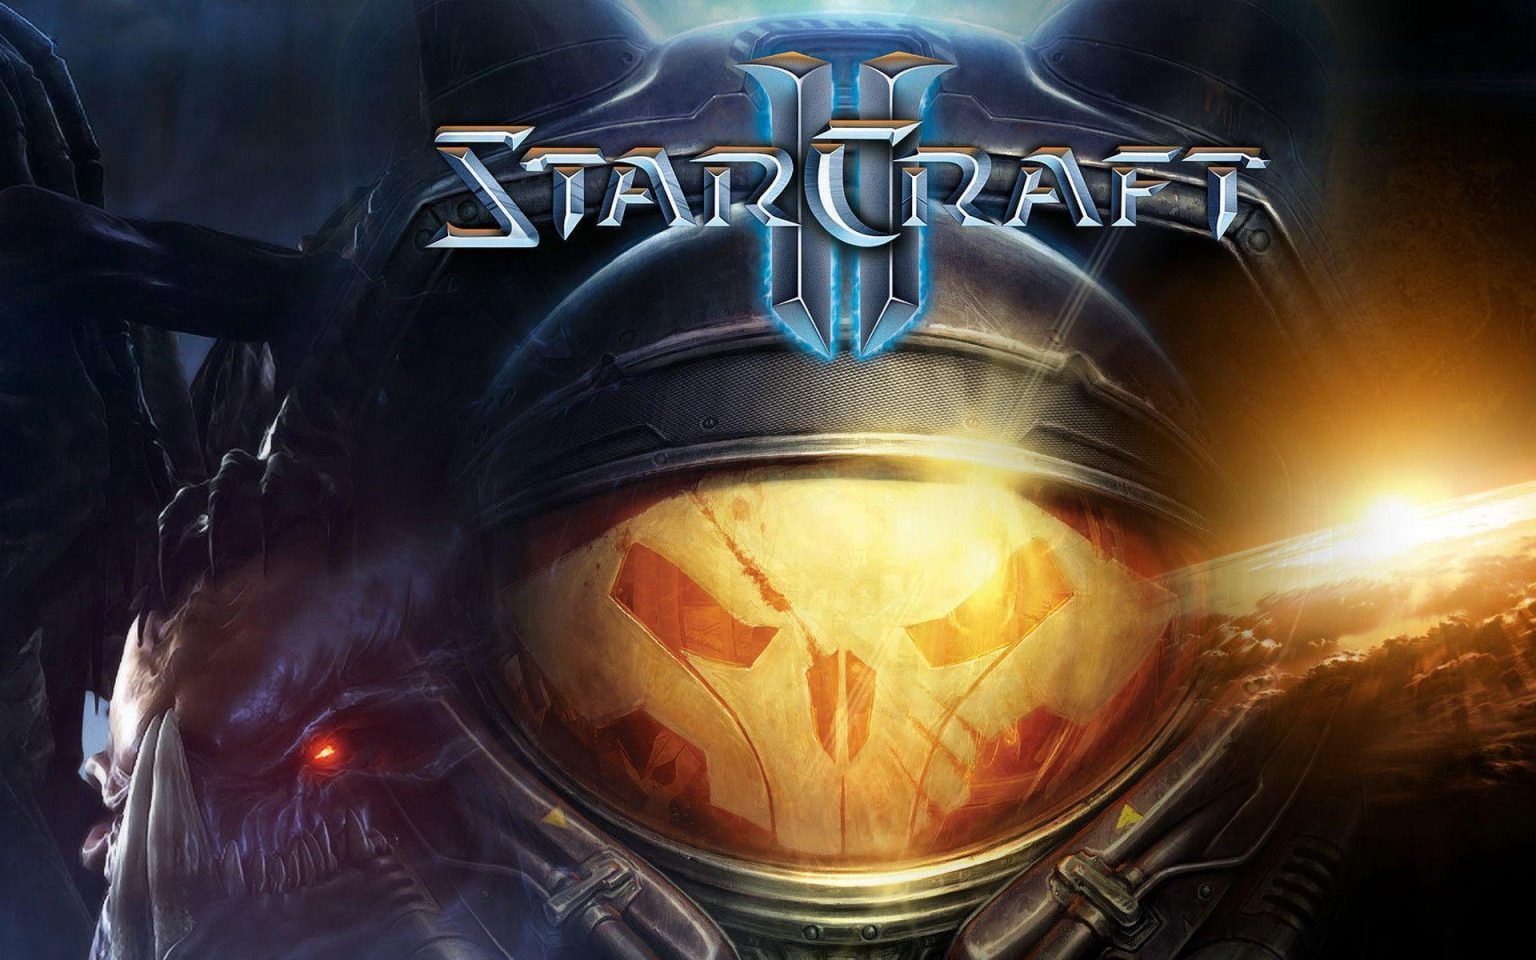 starcraft 2 free download full game cracked mac